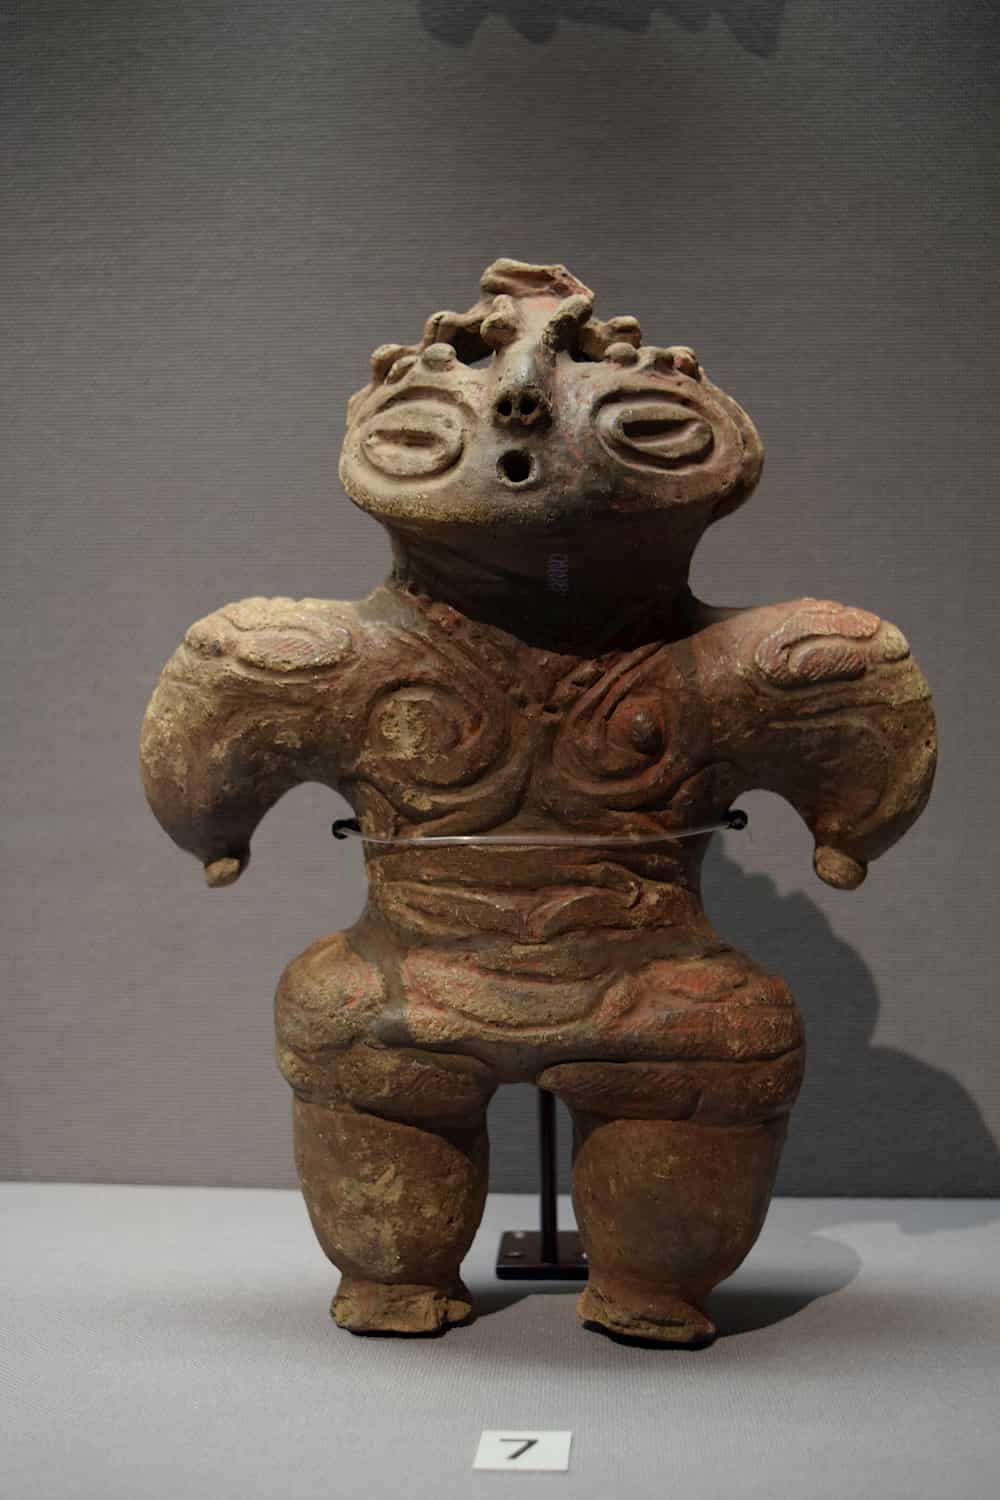 A Jomon stone figurine or gangu. Komukai, Nanbu-cho, Aomori, Japan. Jomon Period, 1000-400 BCE - Tokyo National Museum - Land Of The Rising Son